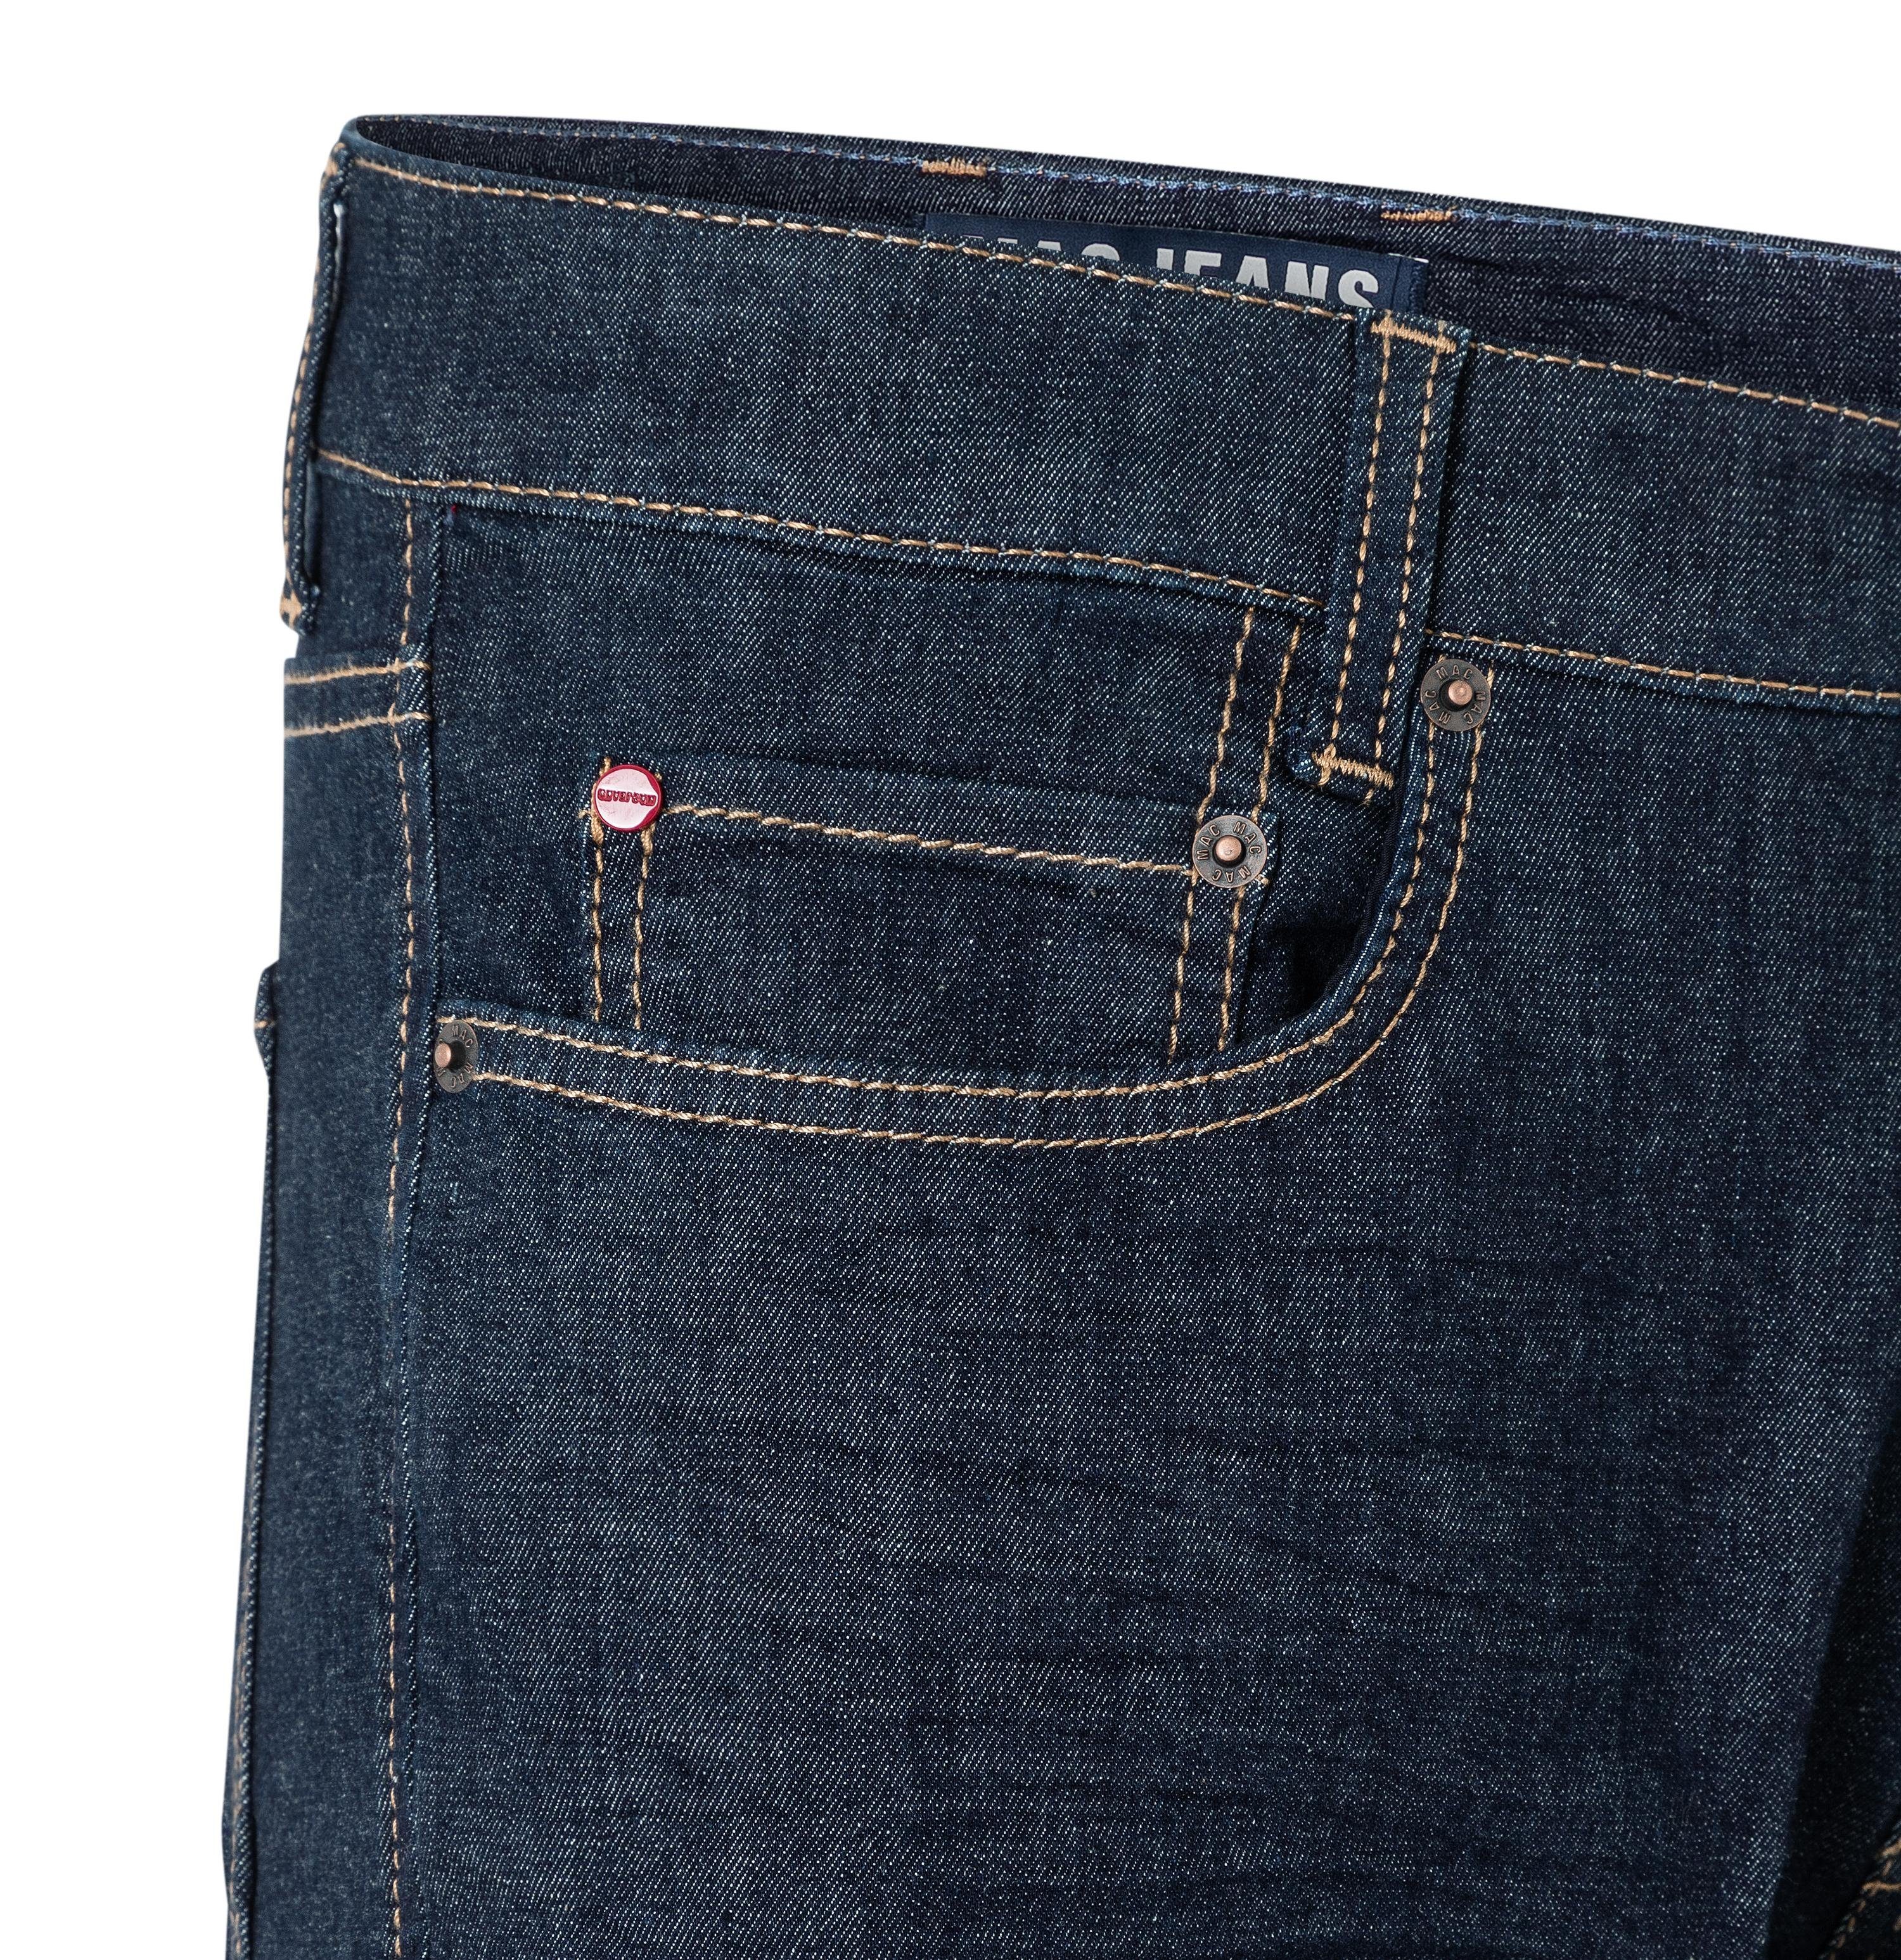 Dark 5-Pocket-Jeans Light Weight Arne H702 Blue Denim, Sommerjeans leichte MAC Rinsed